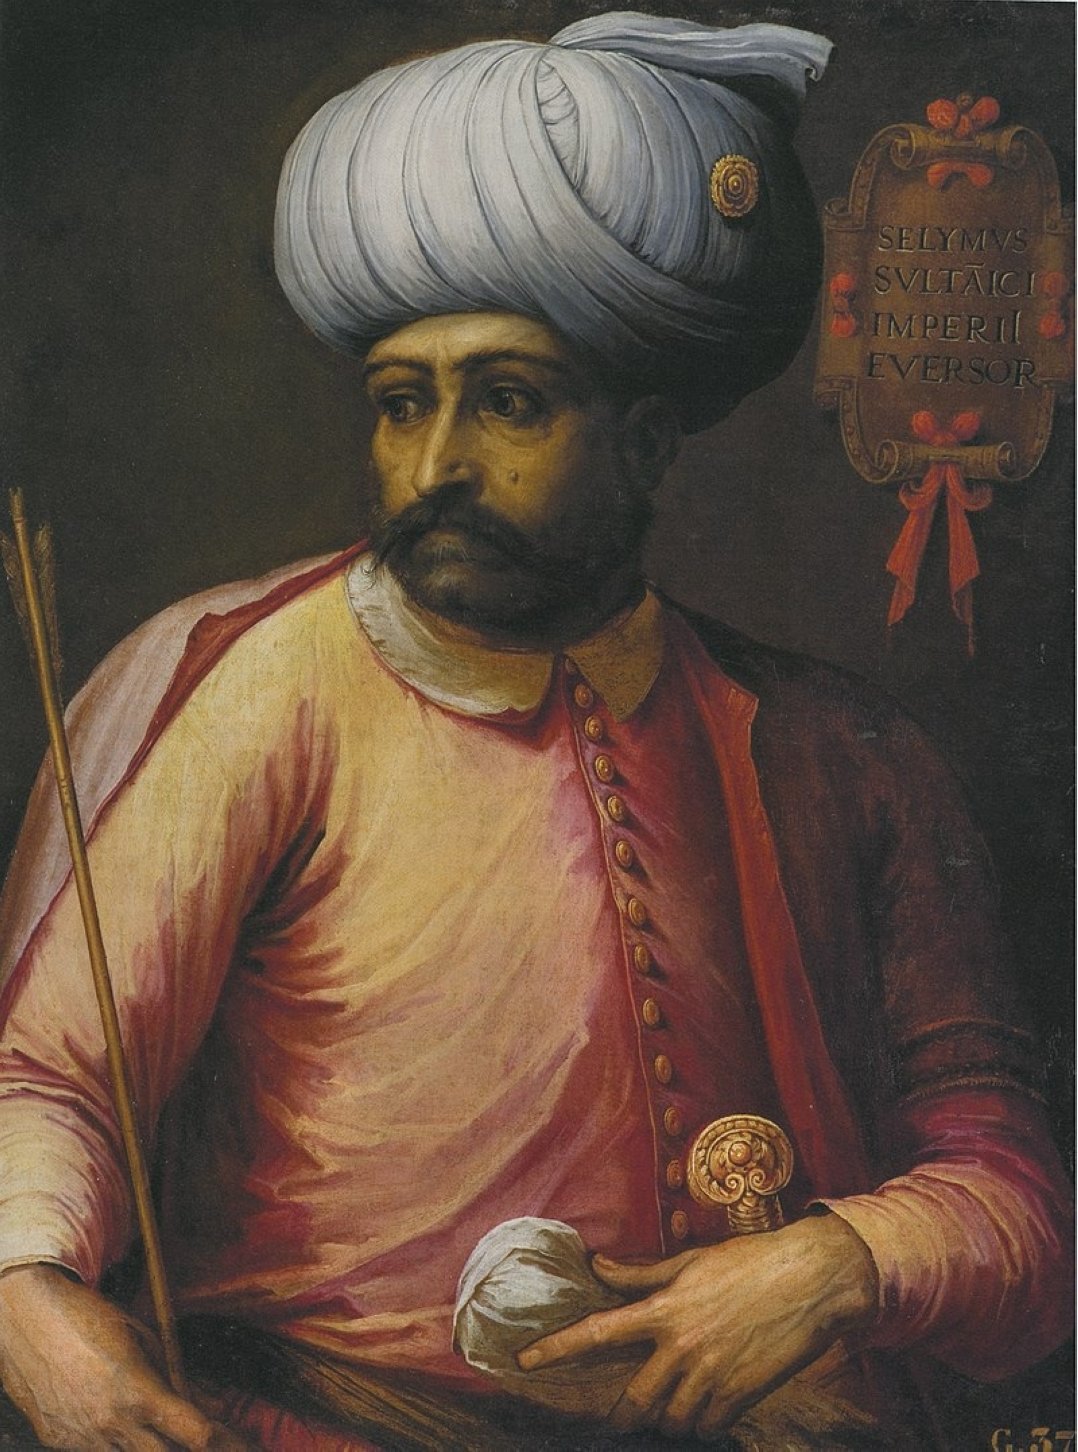 A portrait of Sultan Selim by an unknown European painter.